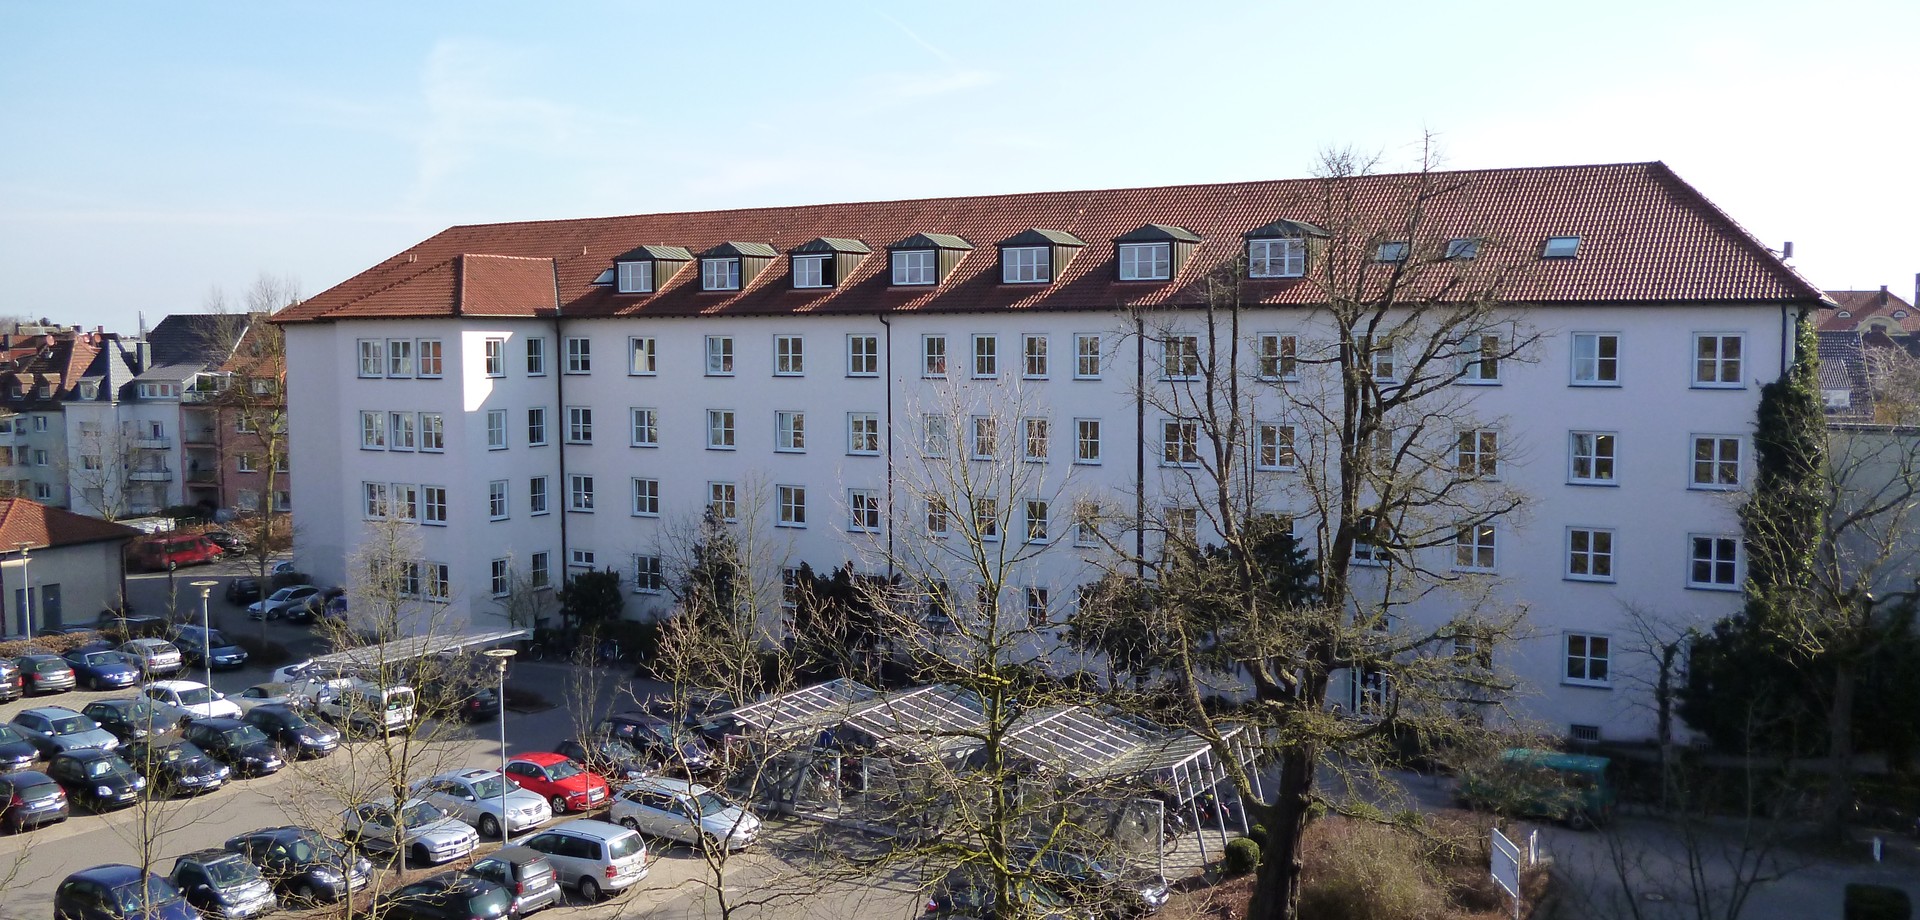 Foto des LWL-Landesjugendamt-Gebäudes (Andreas Gleis).